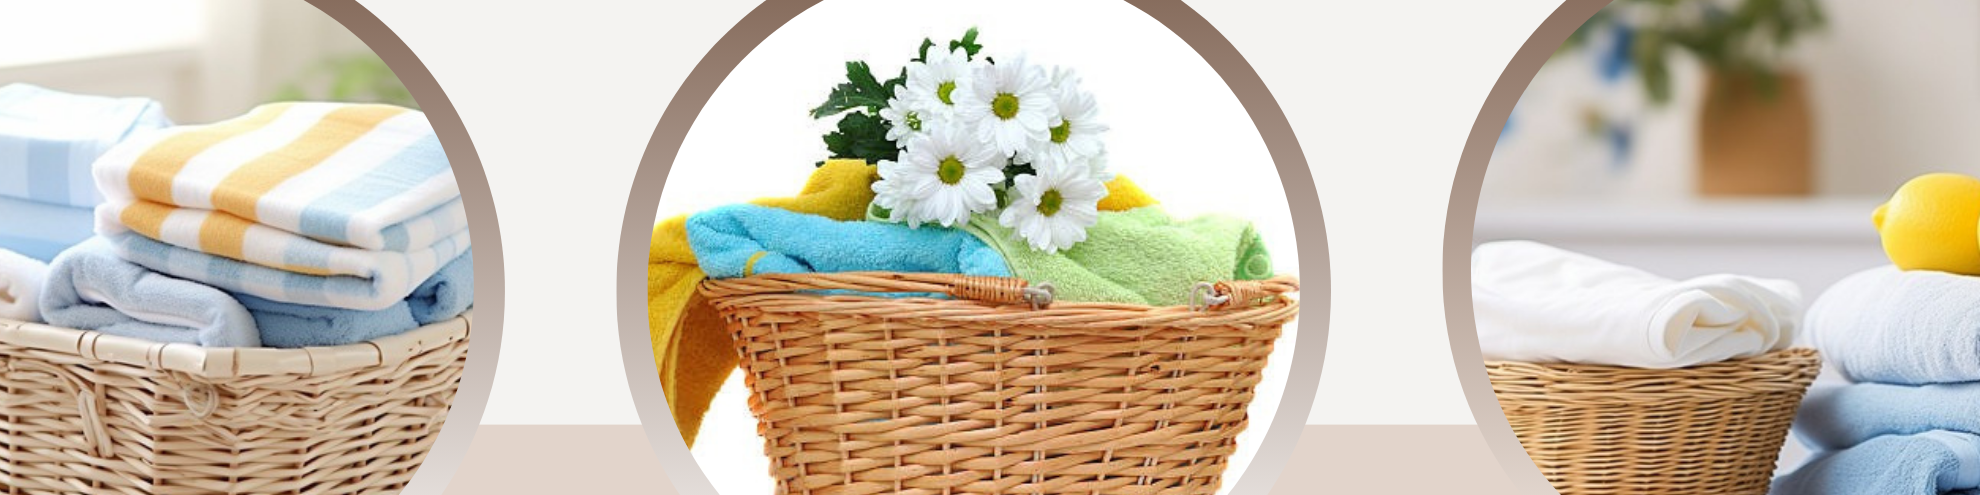 HY decoration Laundry Baskets